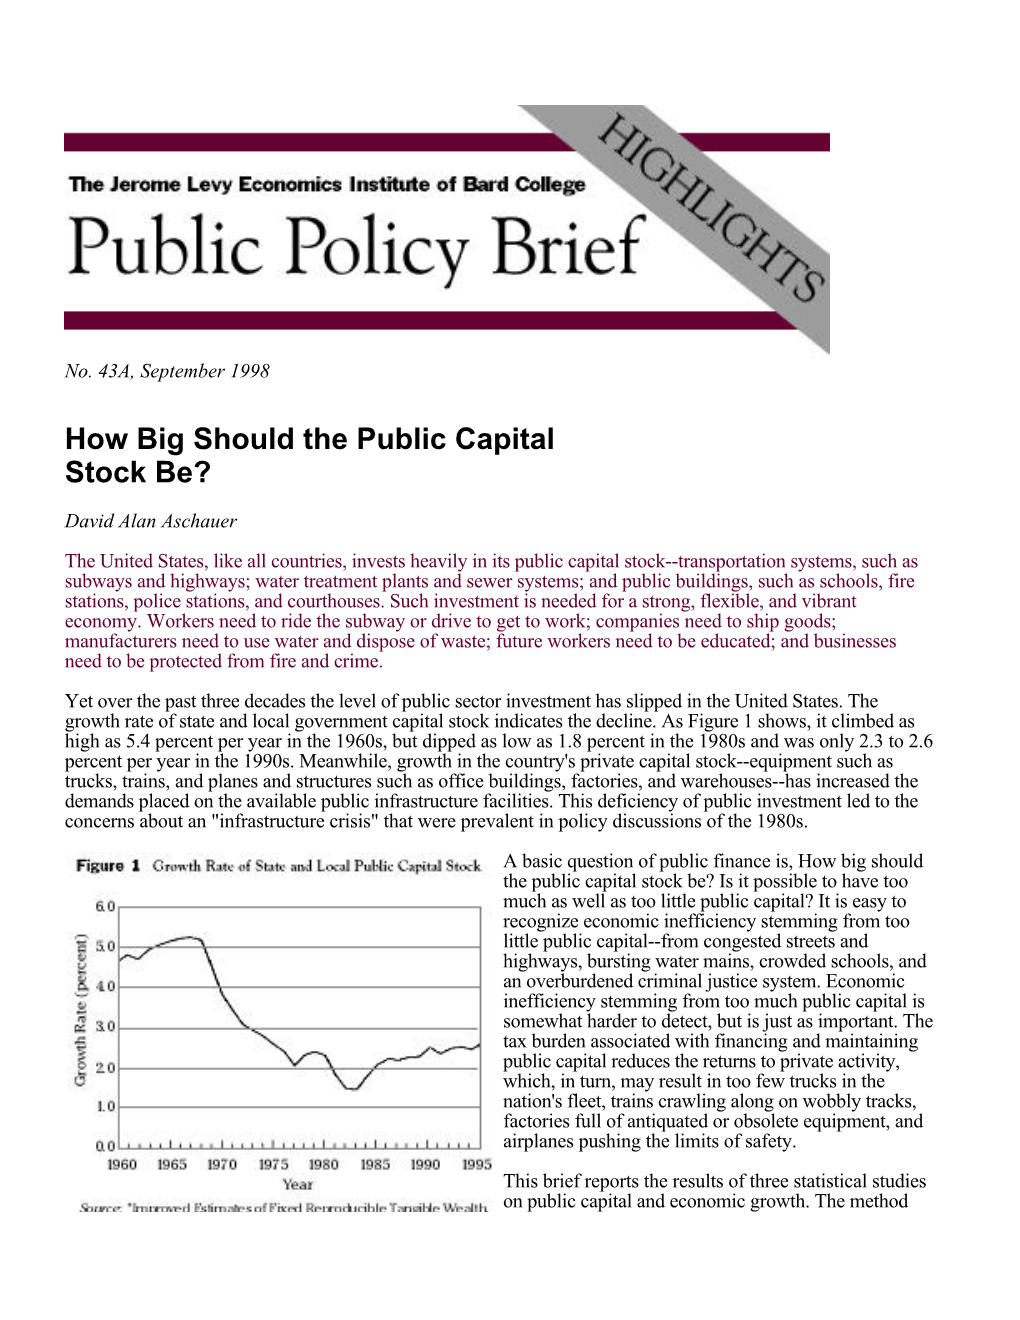 How Big Should the Public Capital Stock Be?